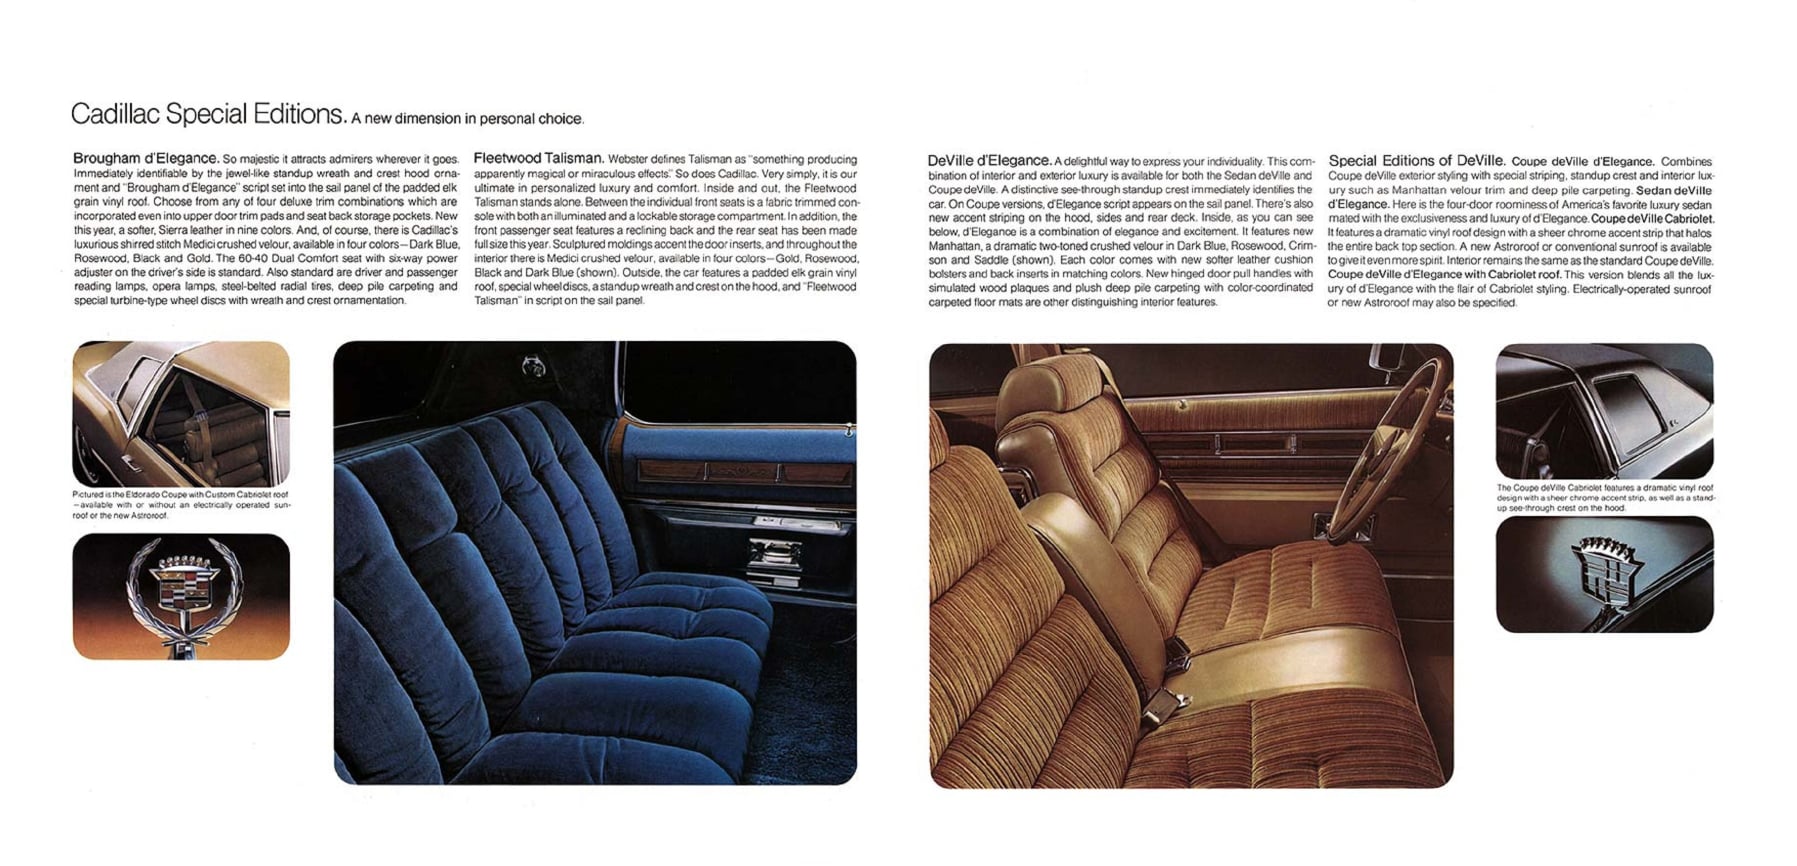 1975 Cadillac Prestige Brochure 22-23